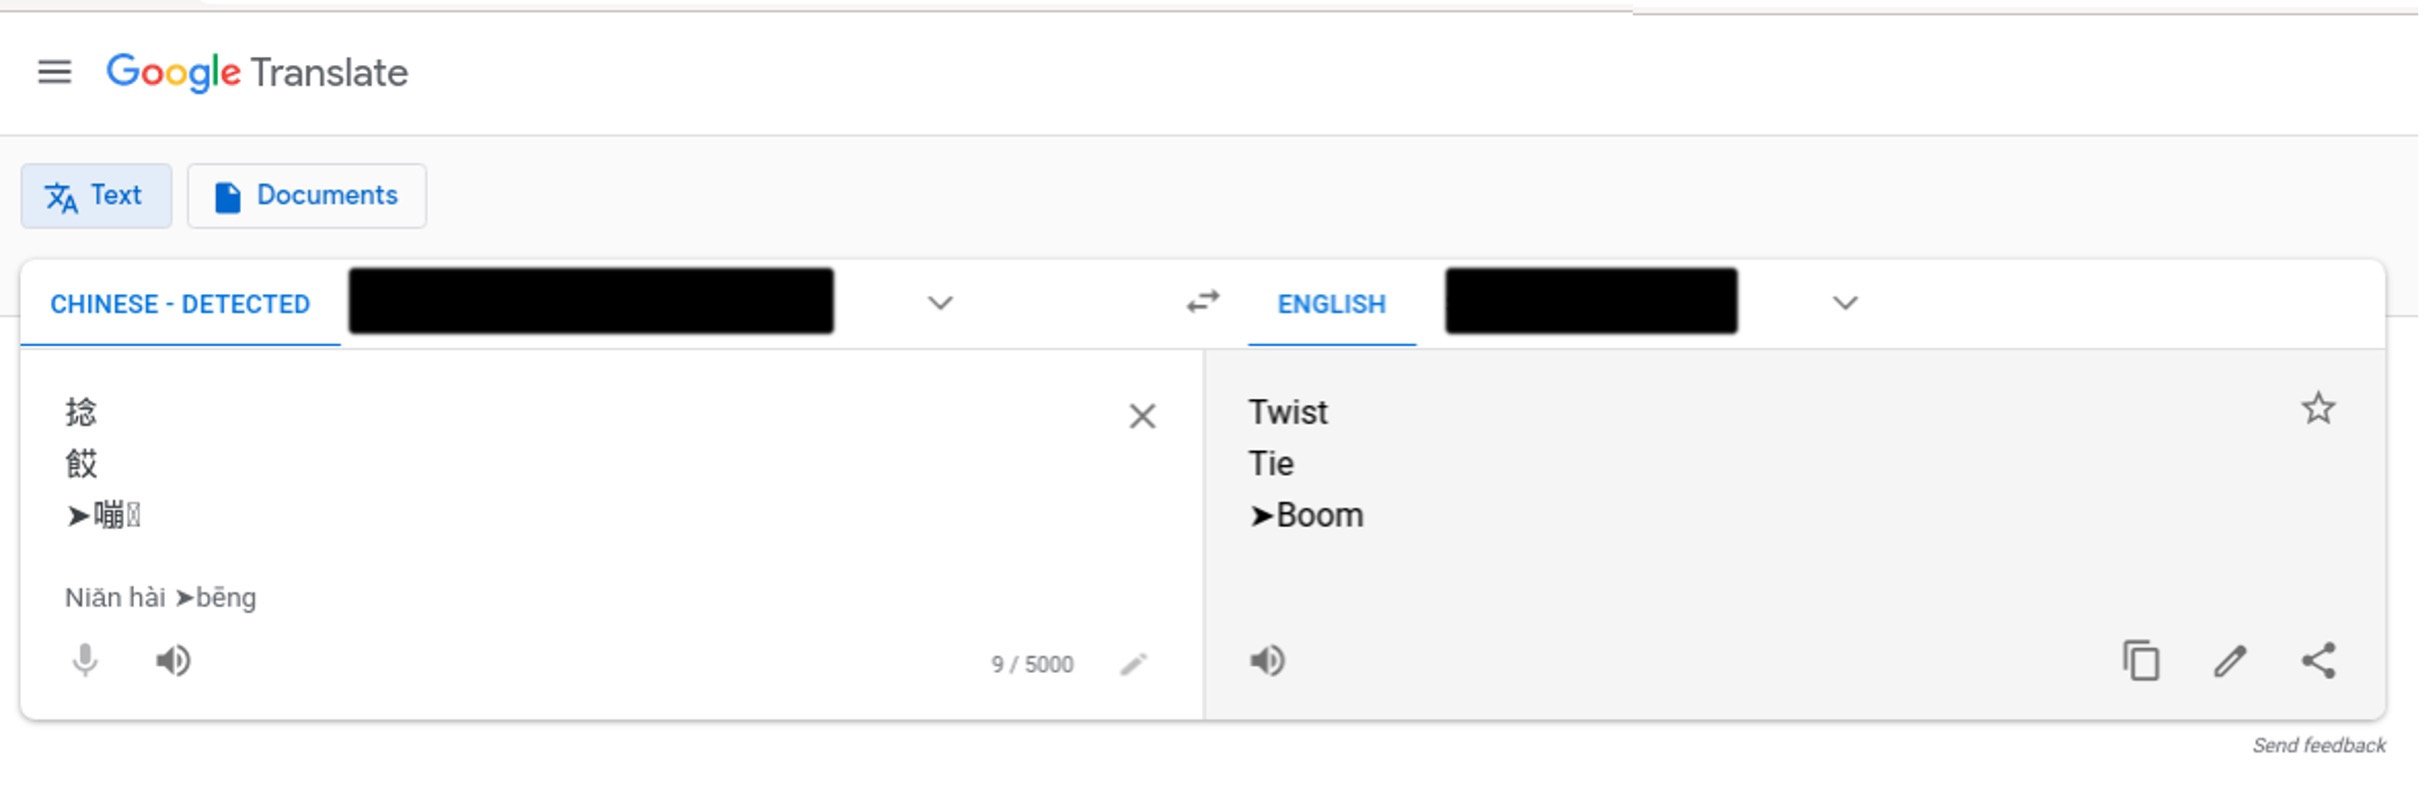 Google Translate showing suspicious HTTP user agent translation